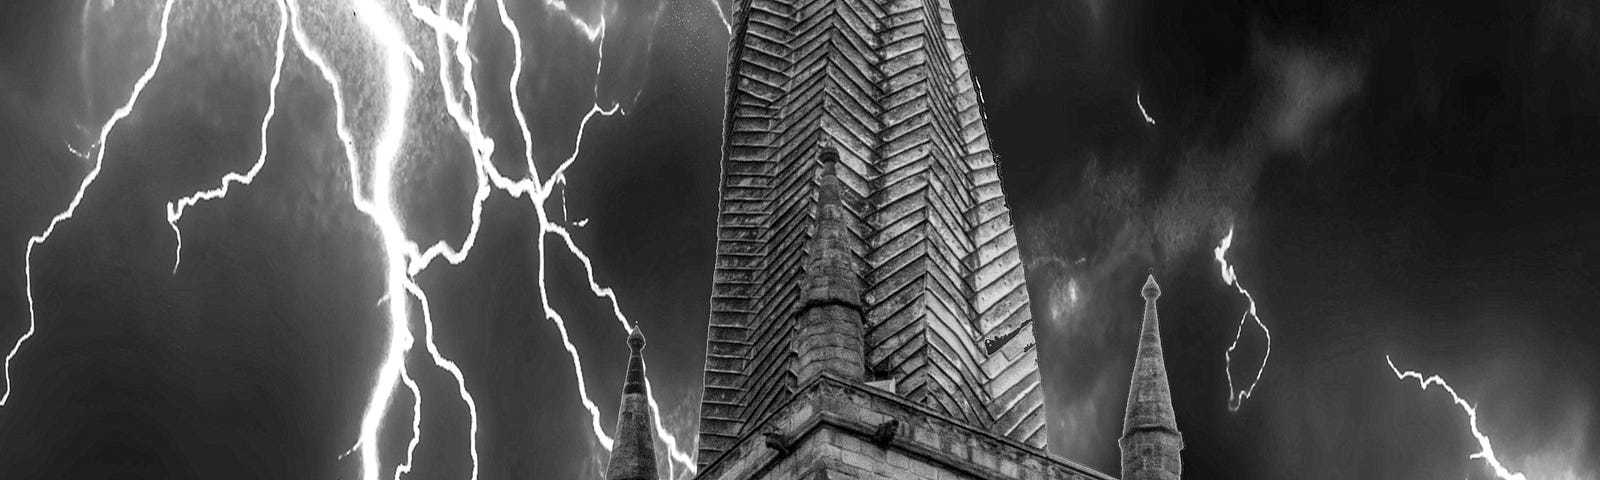 Lightning striking an old church